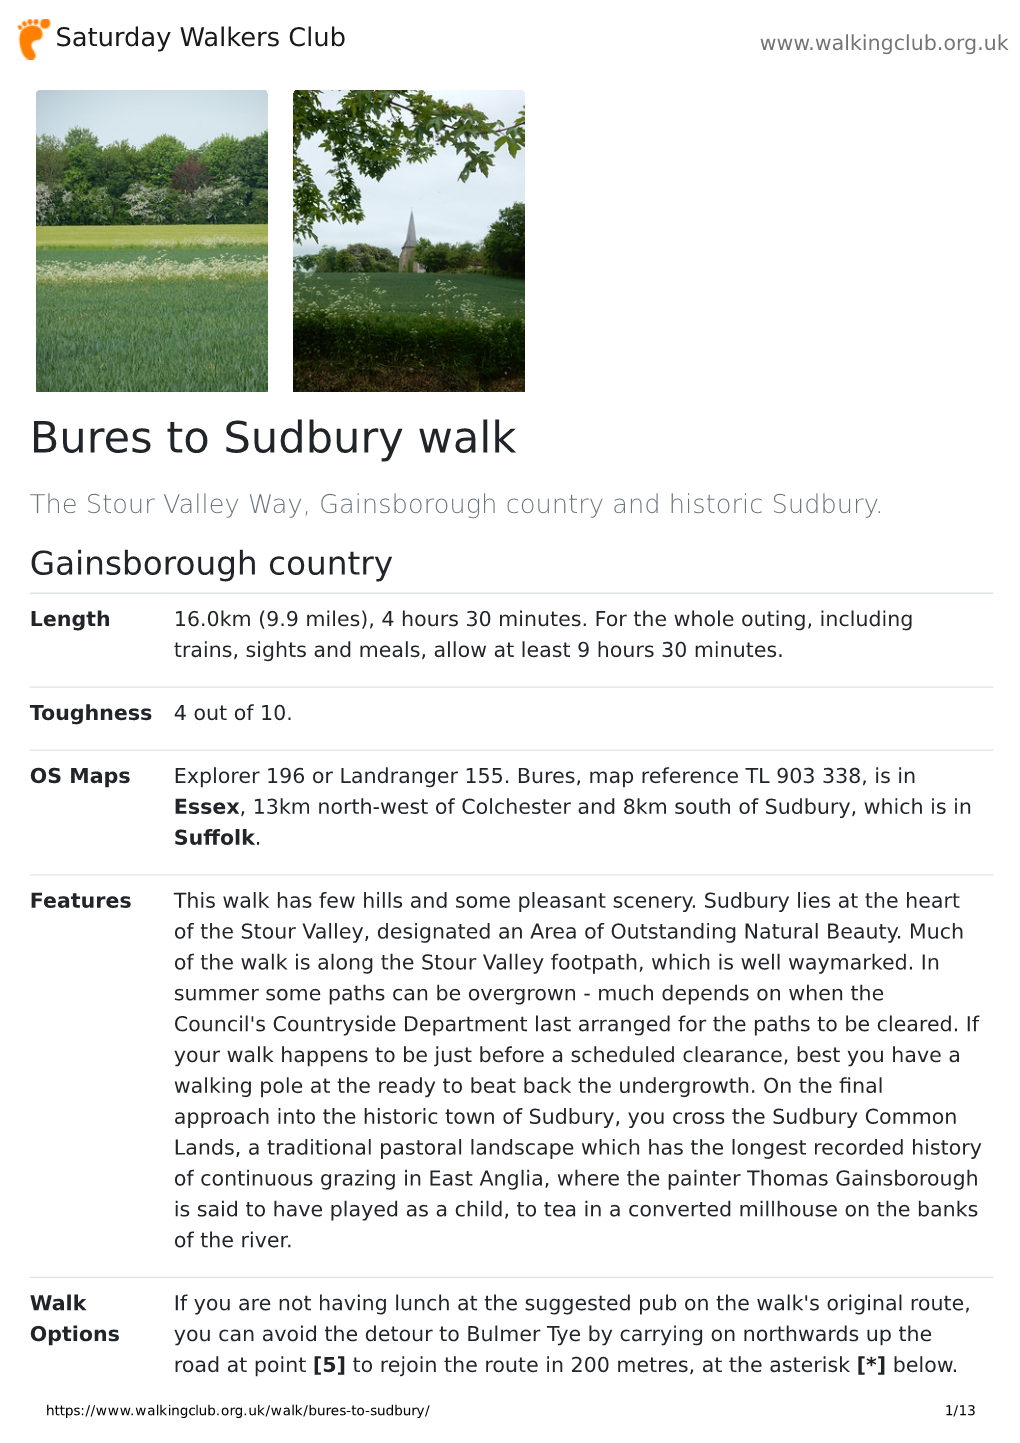 Bures to Sudbury Walk